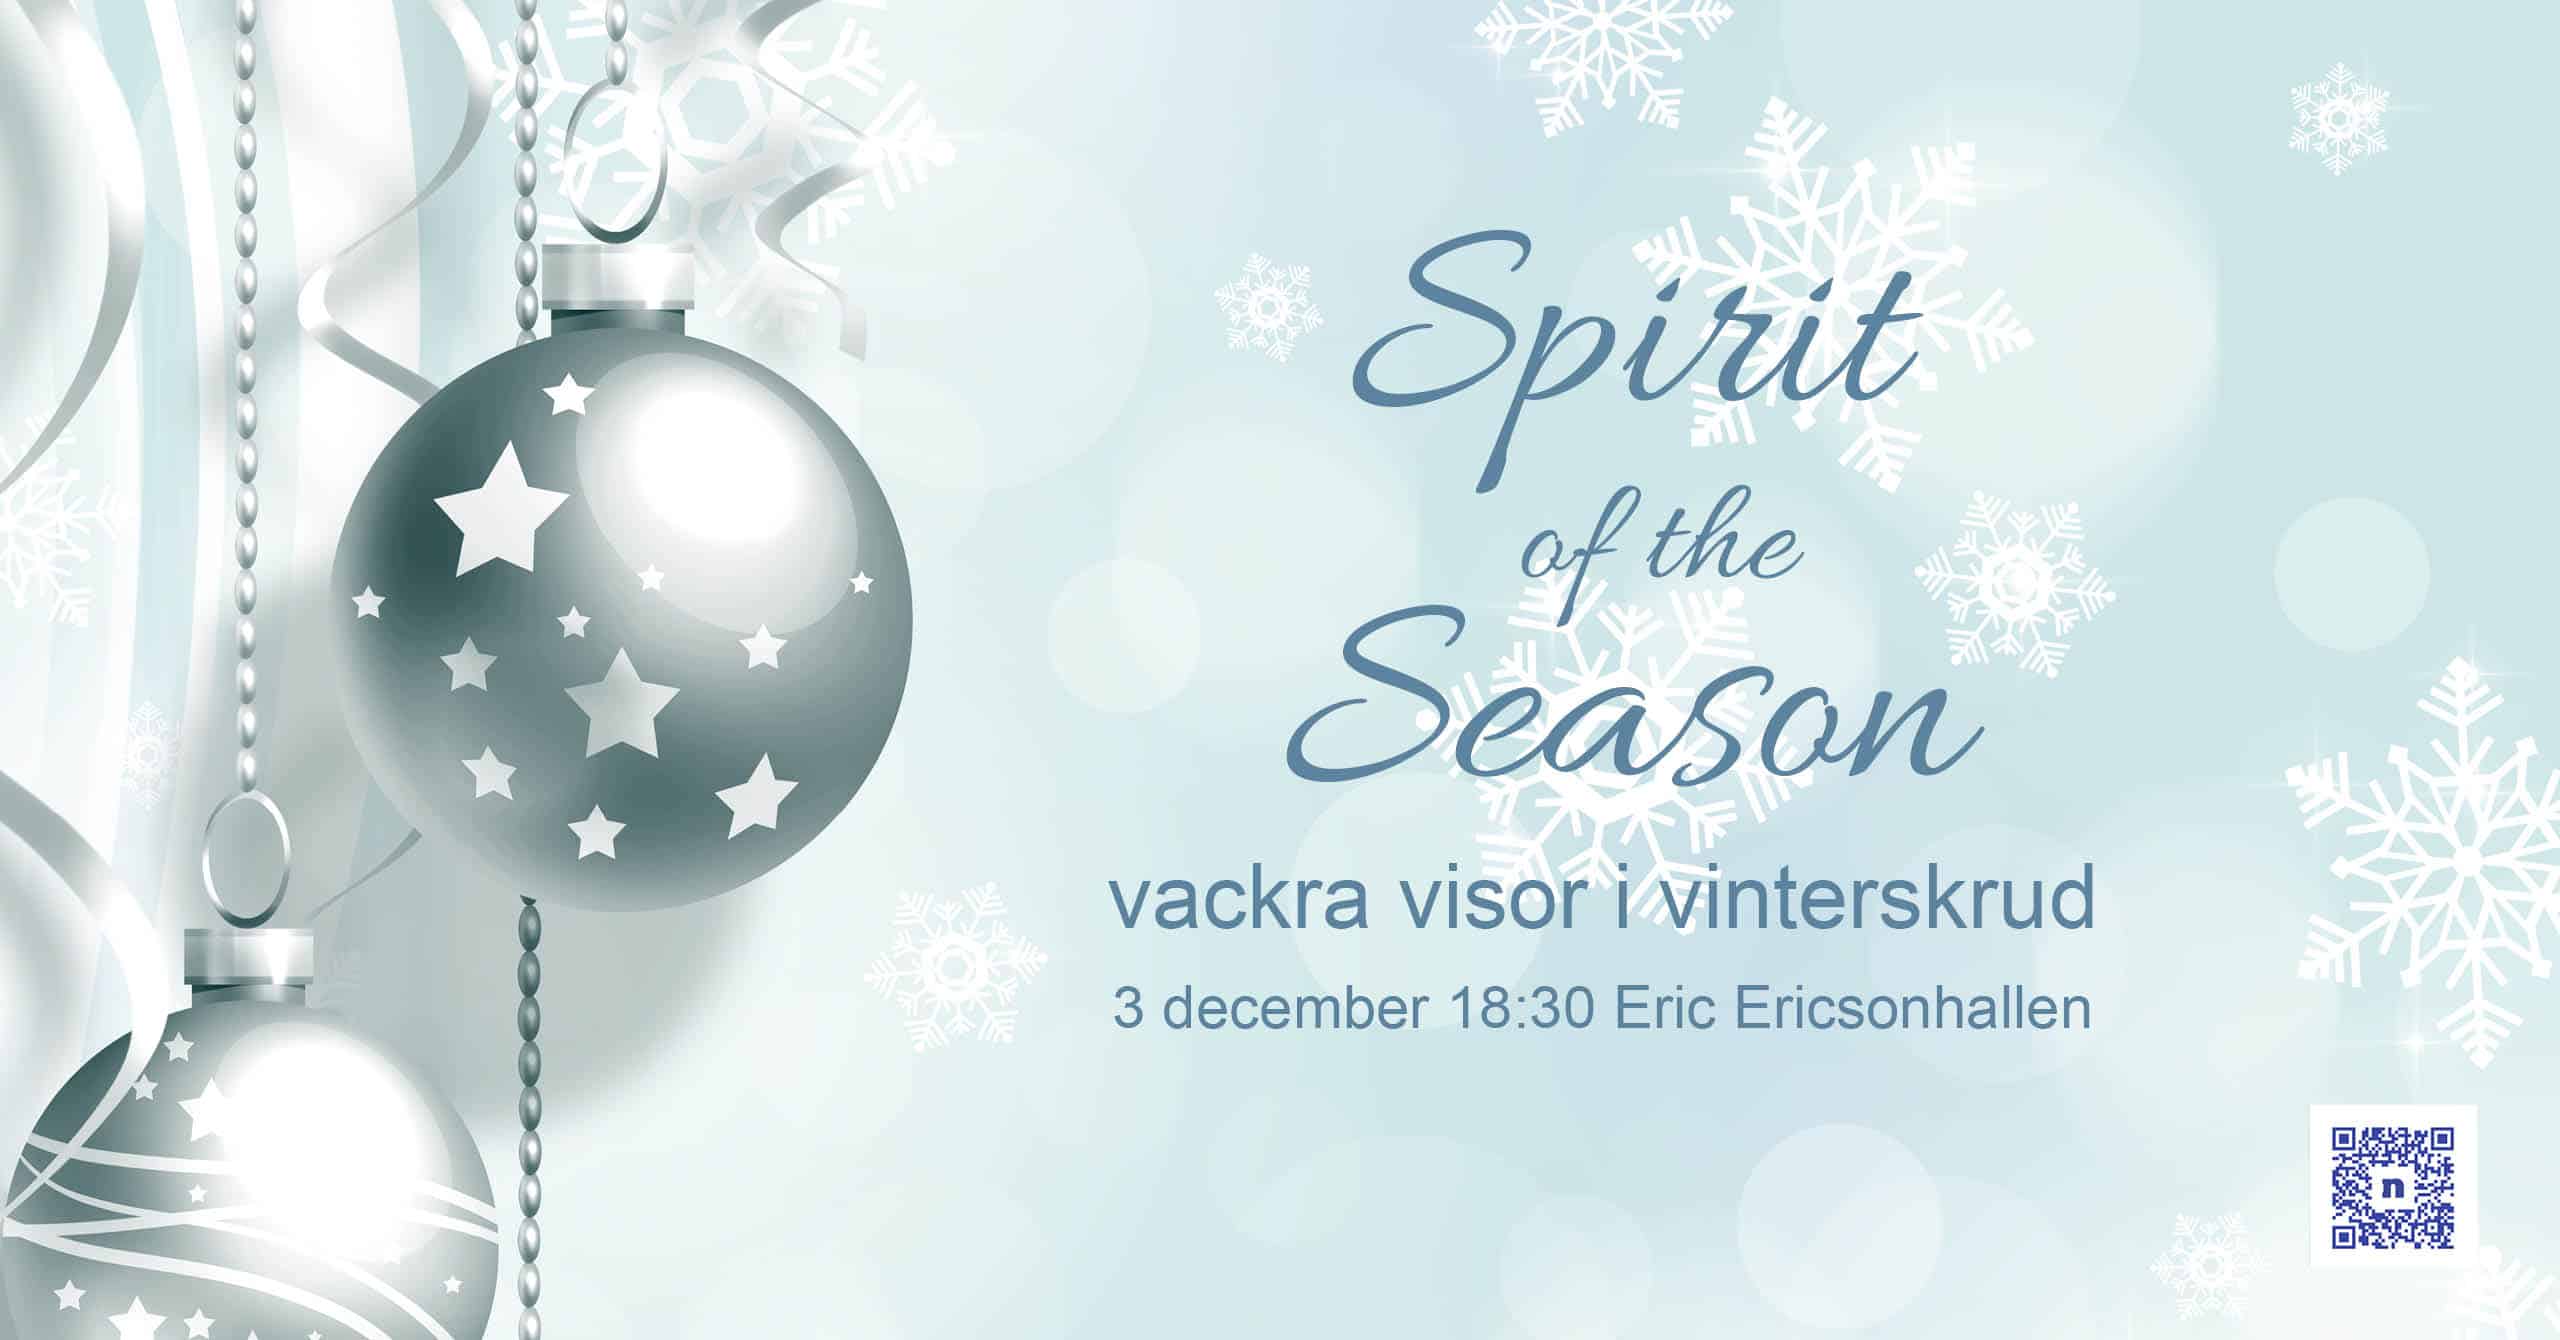 spirit-of-the-season-banner-ny